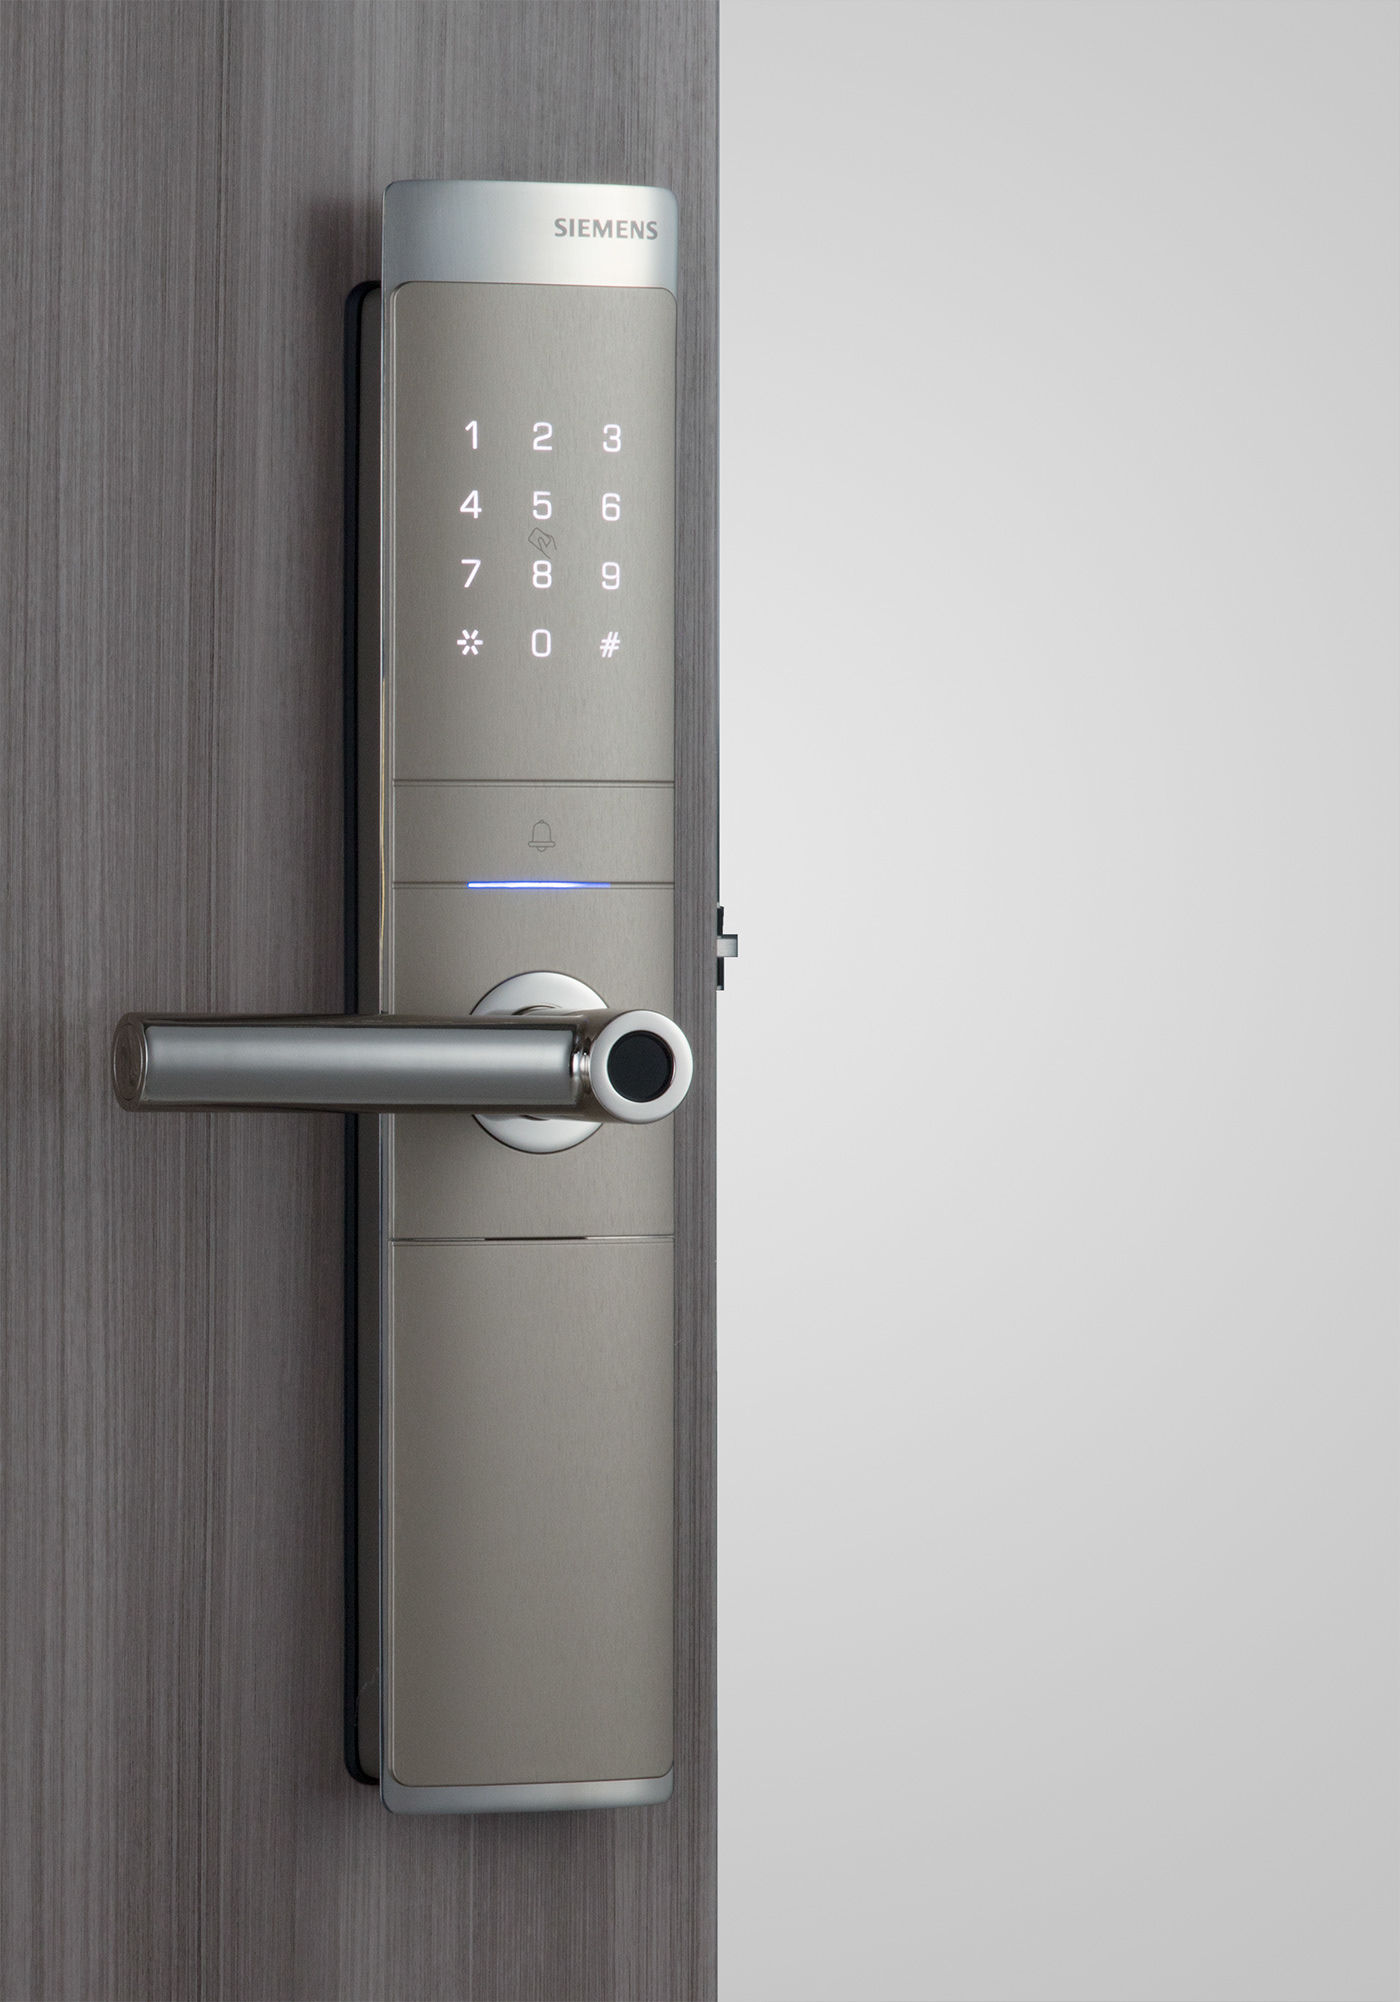 Siemens smart lock IoT industrial design  smart device lock house appliance